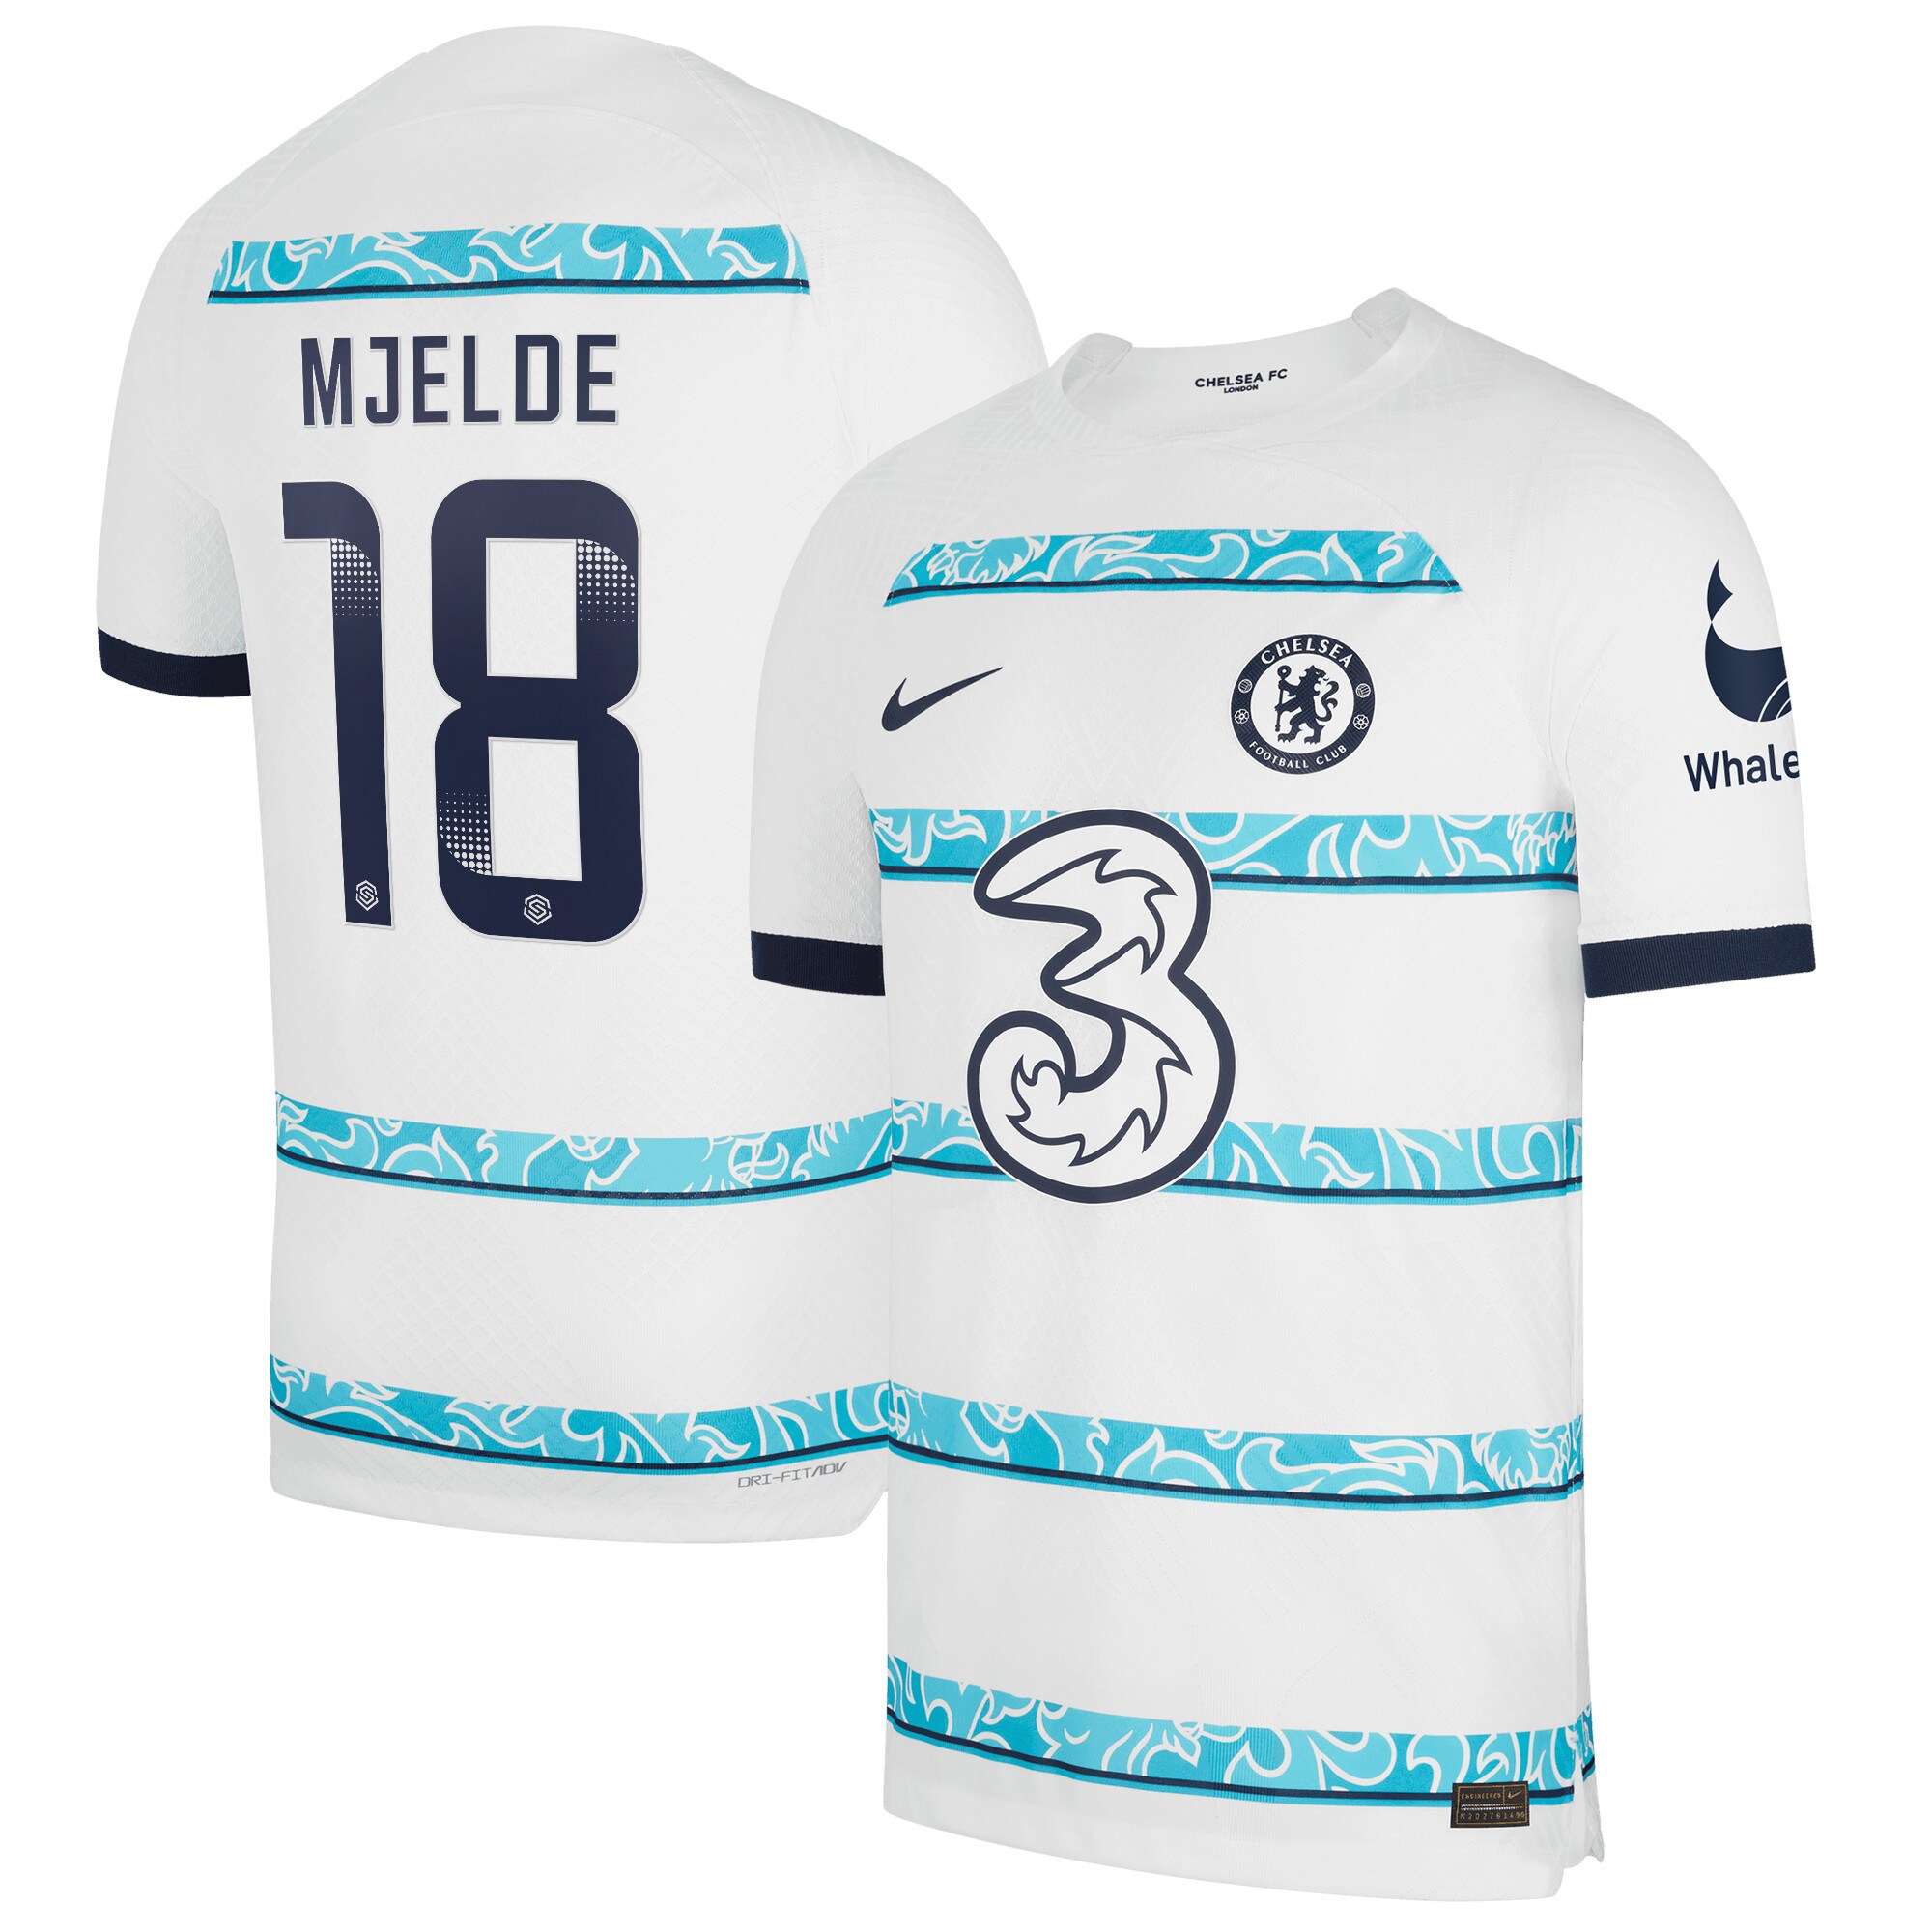 Chelsea WSL Away Vapor Match Shirt 2022-23 with Mjelde 18 printing